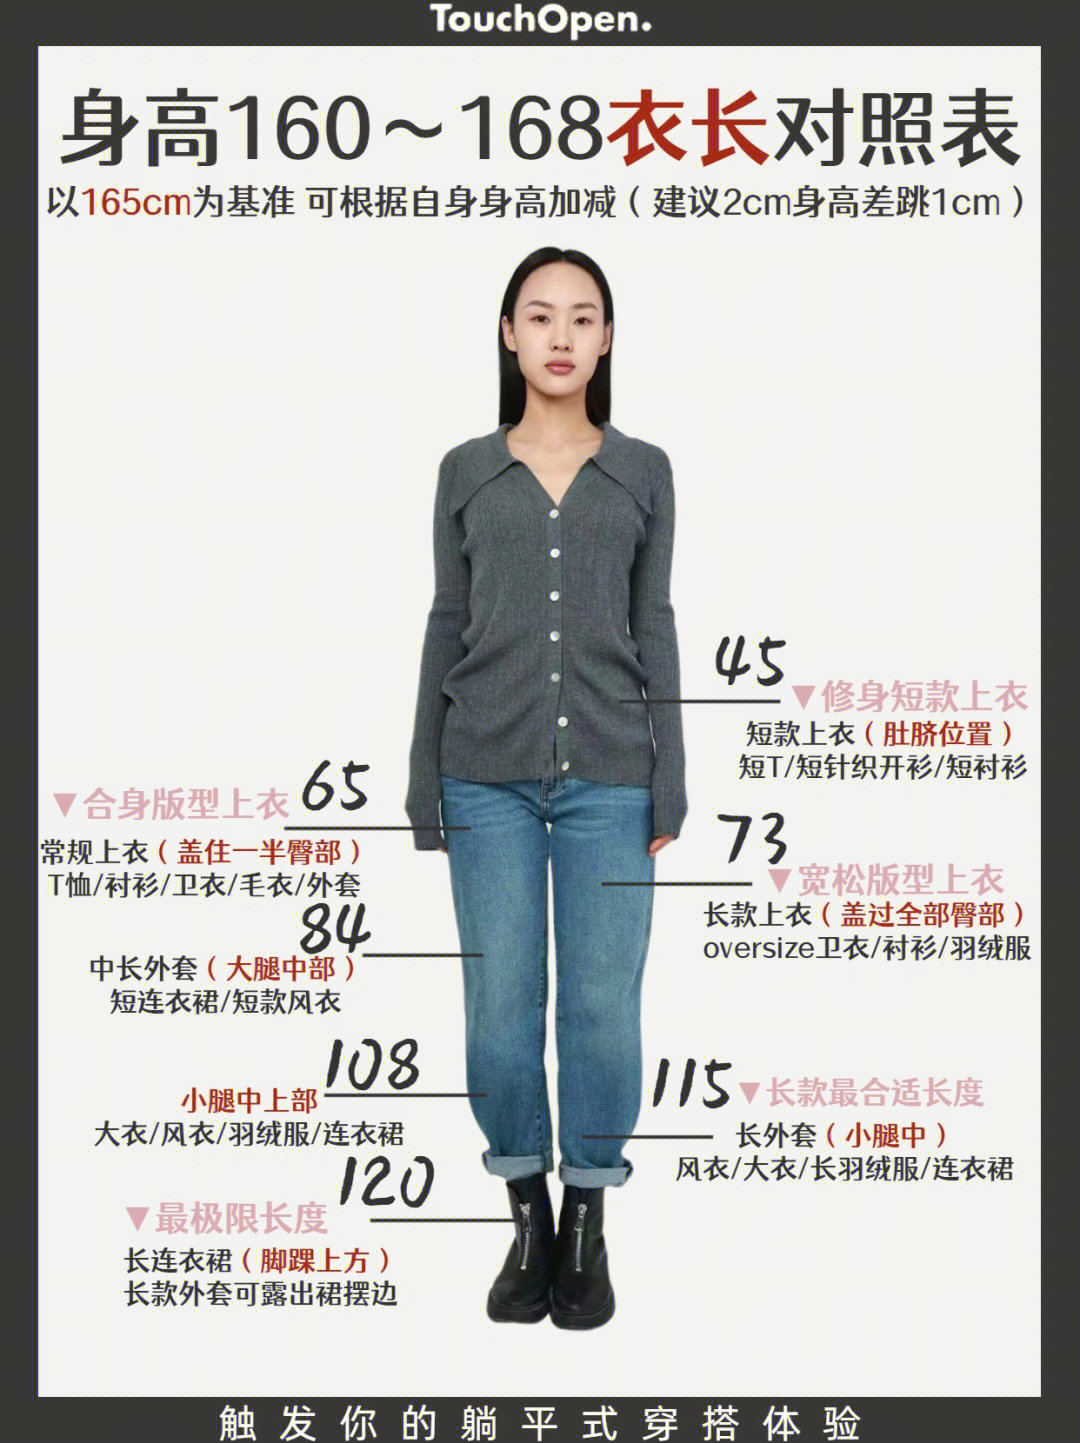 160～168cm是女生中最常见的身高啦,这篇超全面的衣长参考表覆盖了衣